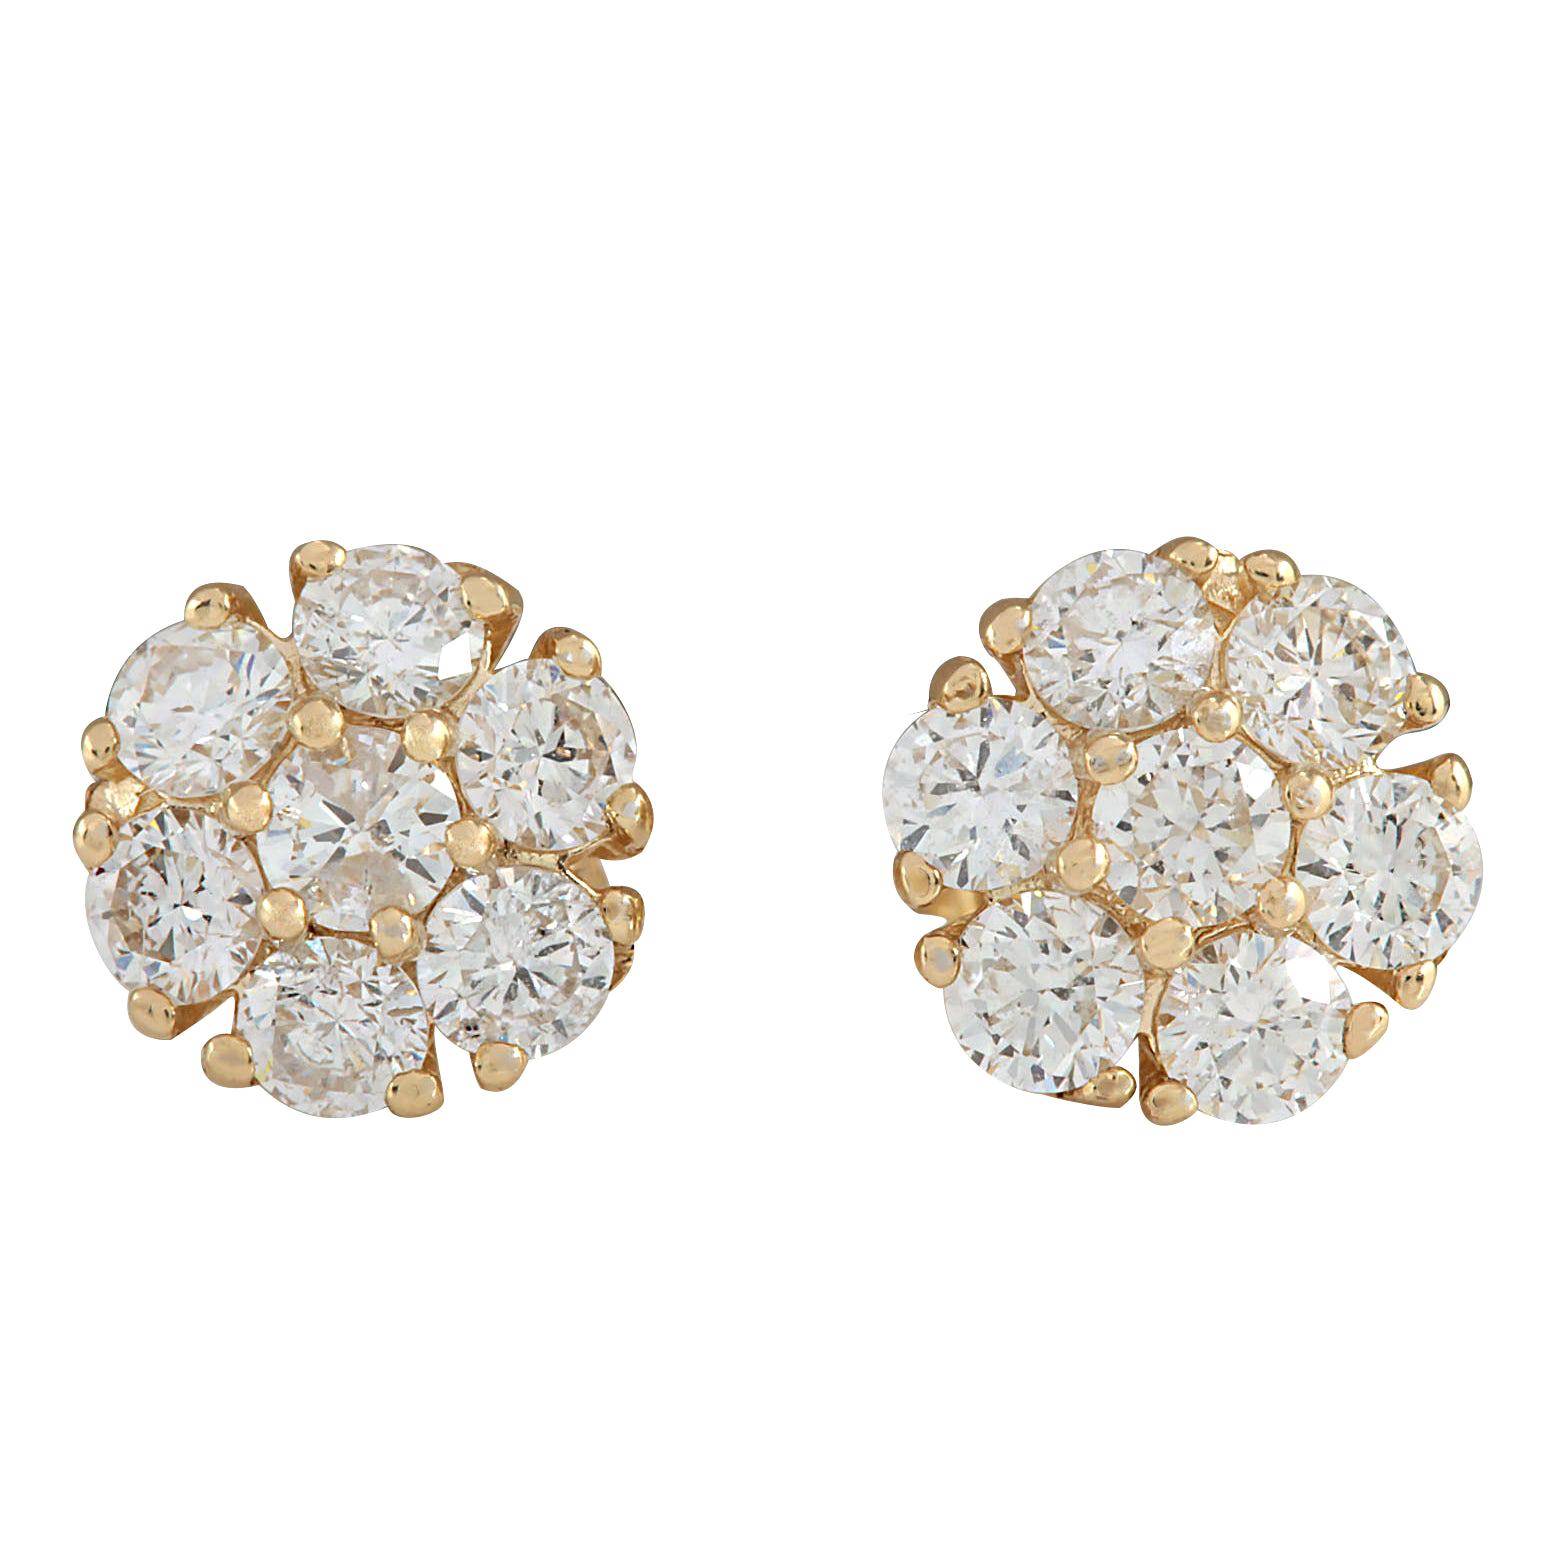 1.00 Carat Natural Diamond Earrings In 14 Karat Yellow Gold 